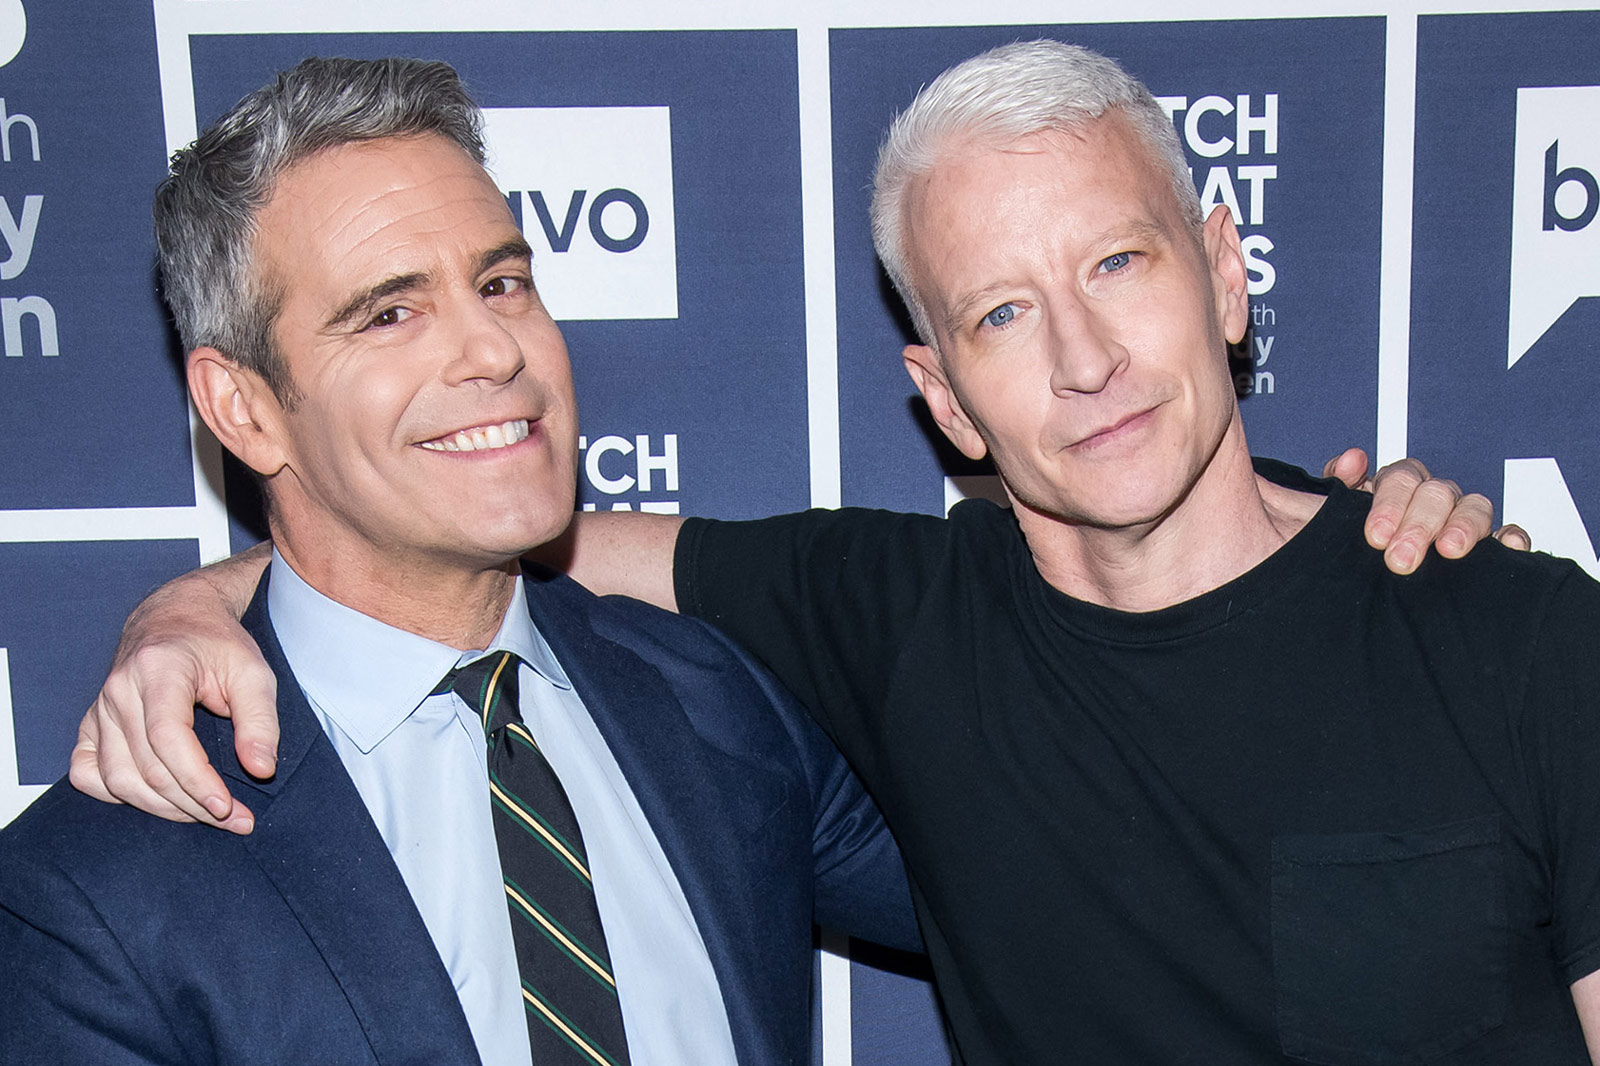 Anderson Cooper Slams Star Jones, Karl Lagerfeld & More (Video)